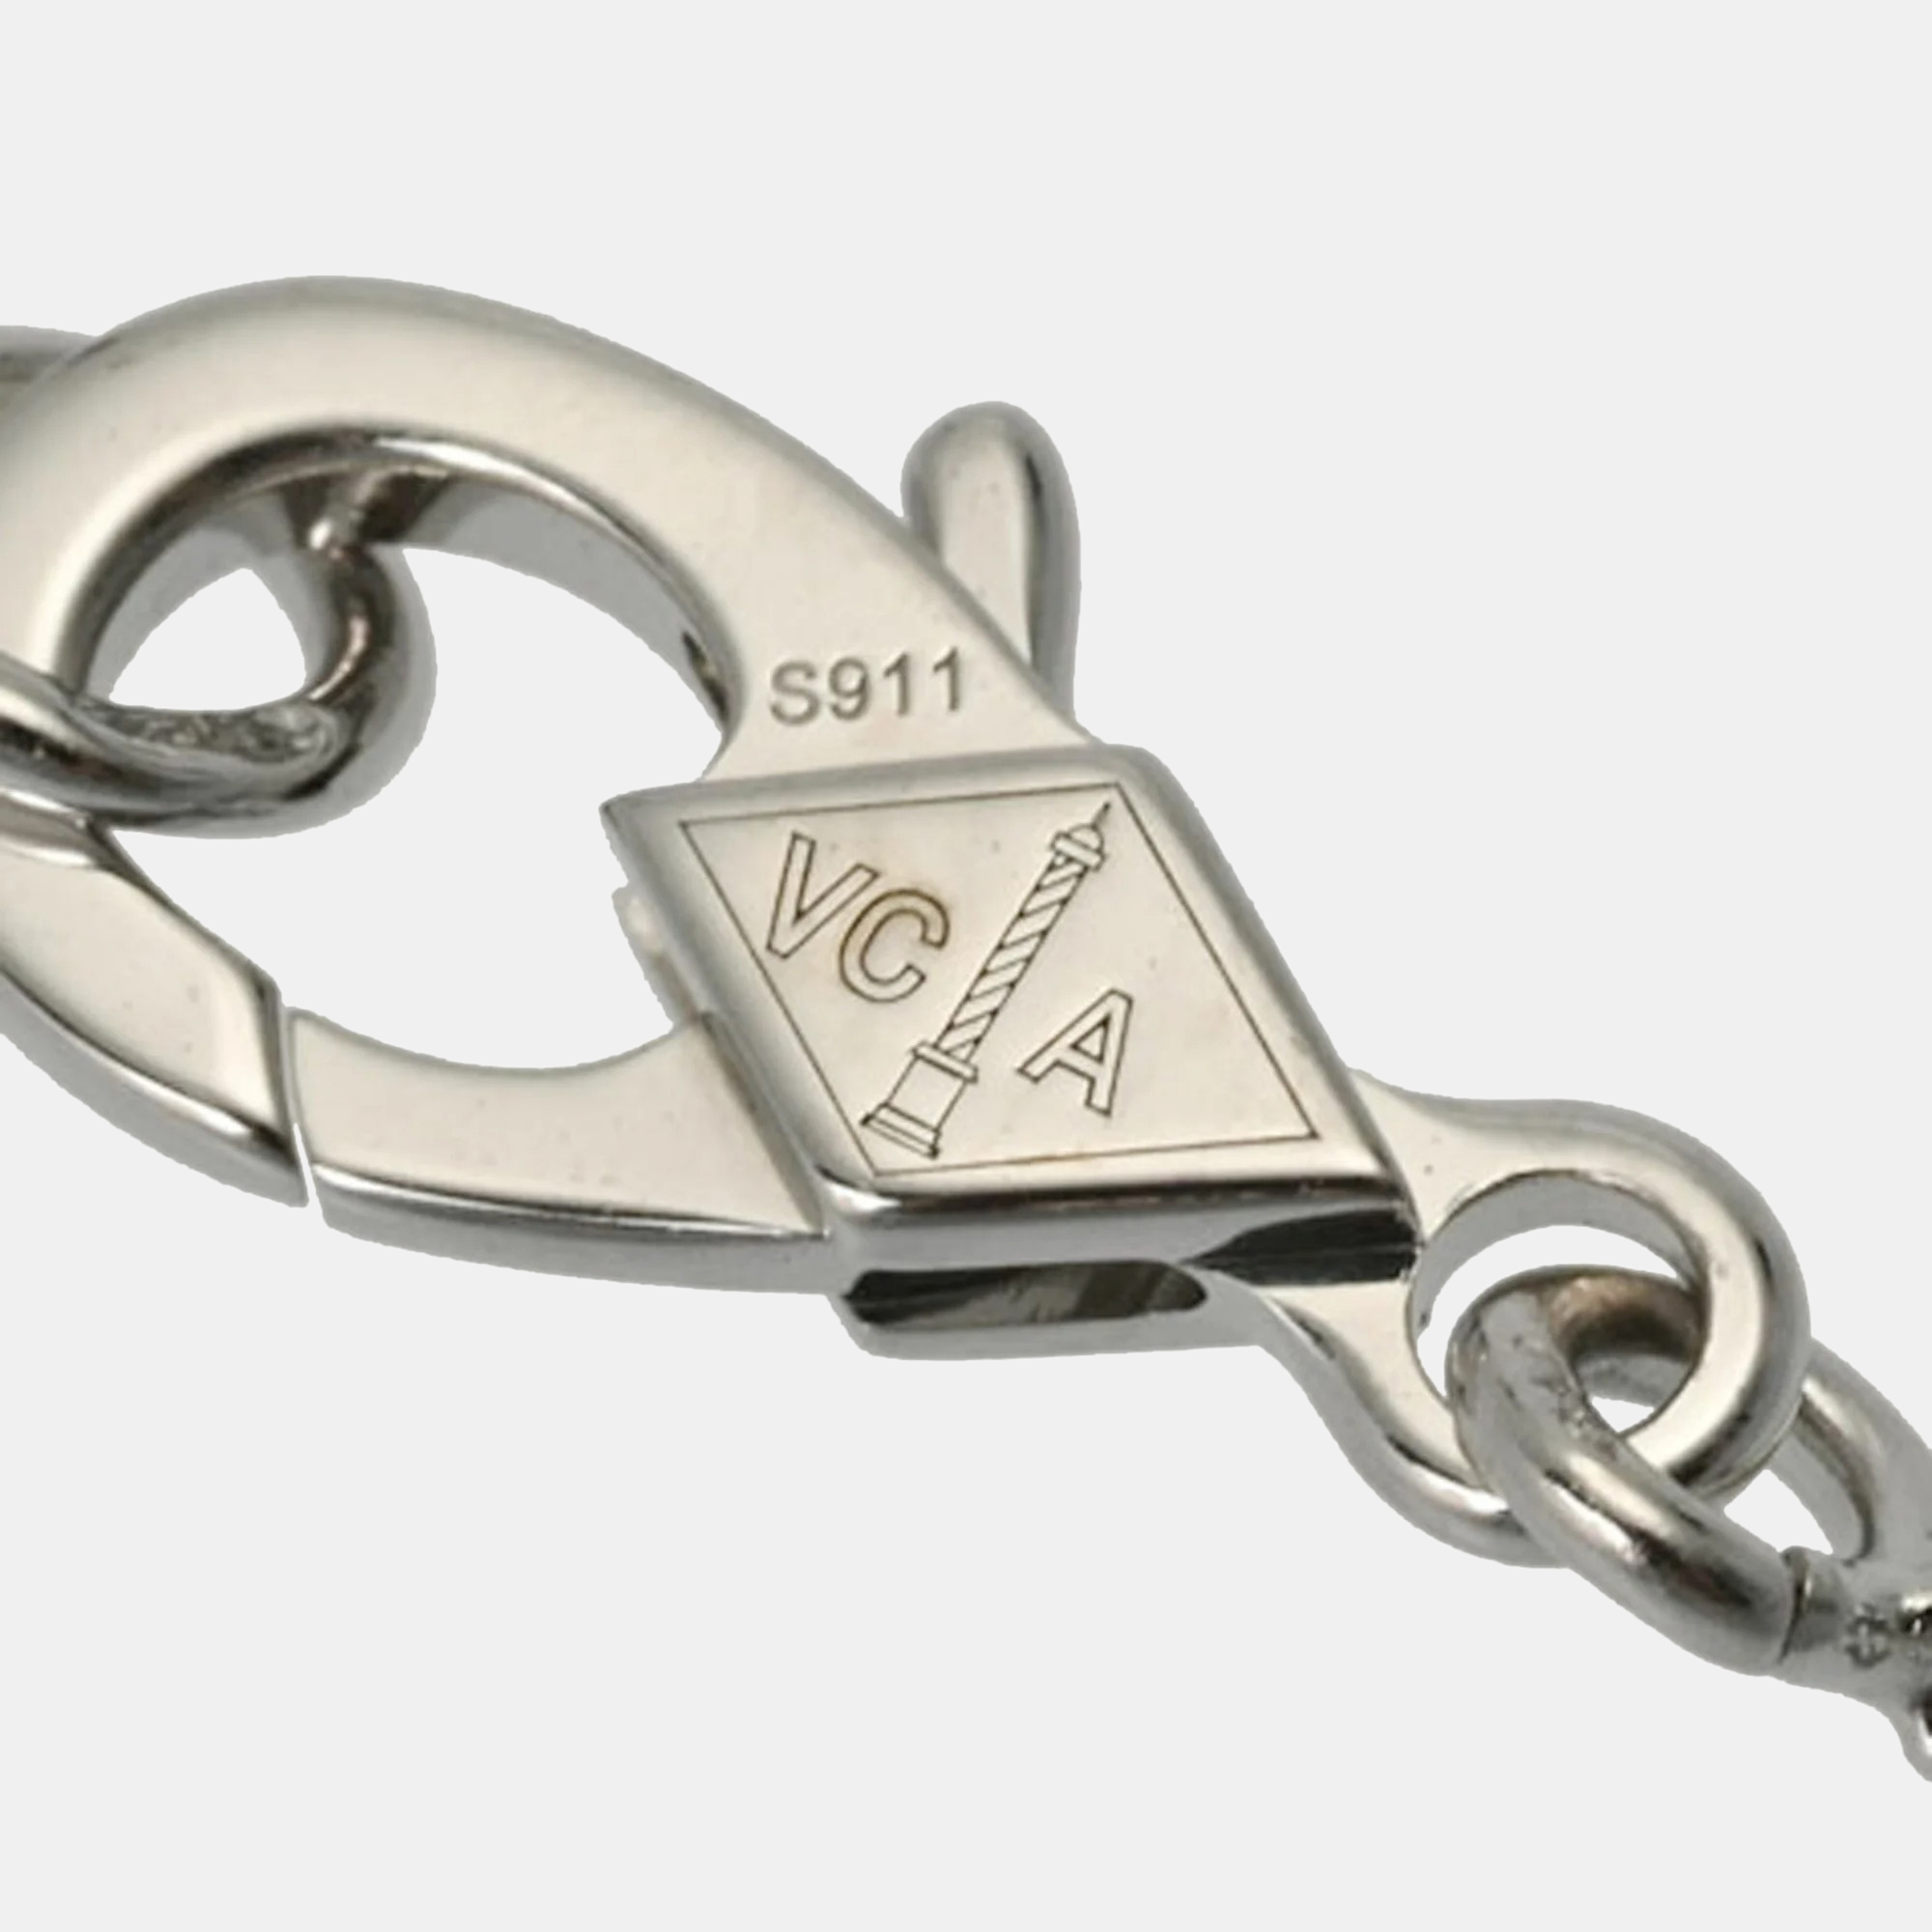 Van Cleef & Arpels 18K White Gold And Diamond Vintage Alhambra Pendant Necklace